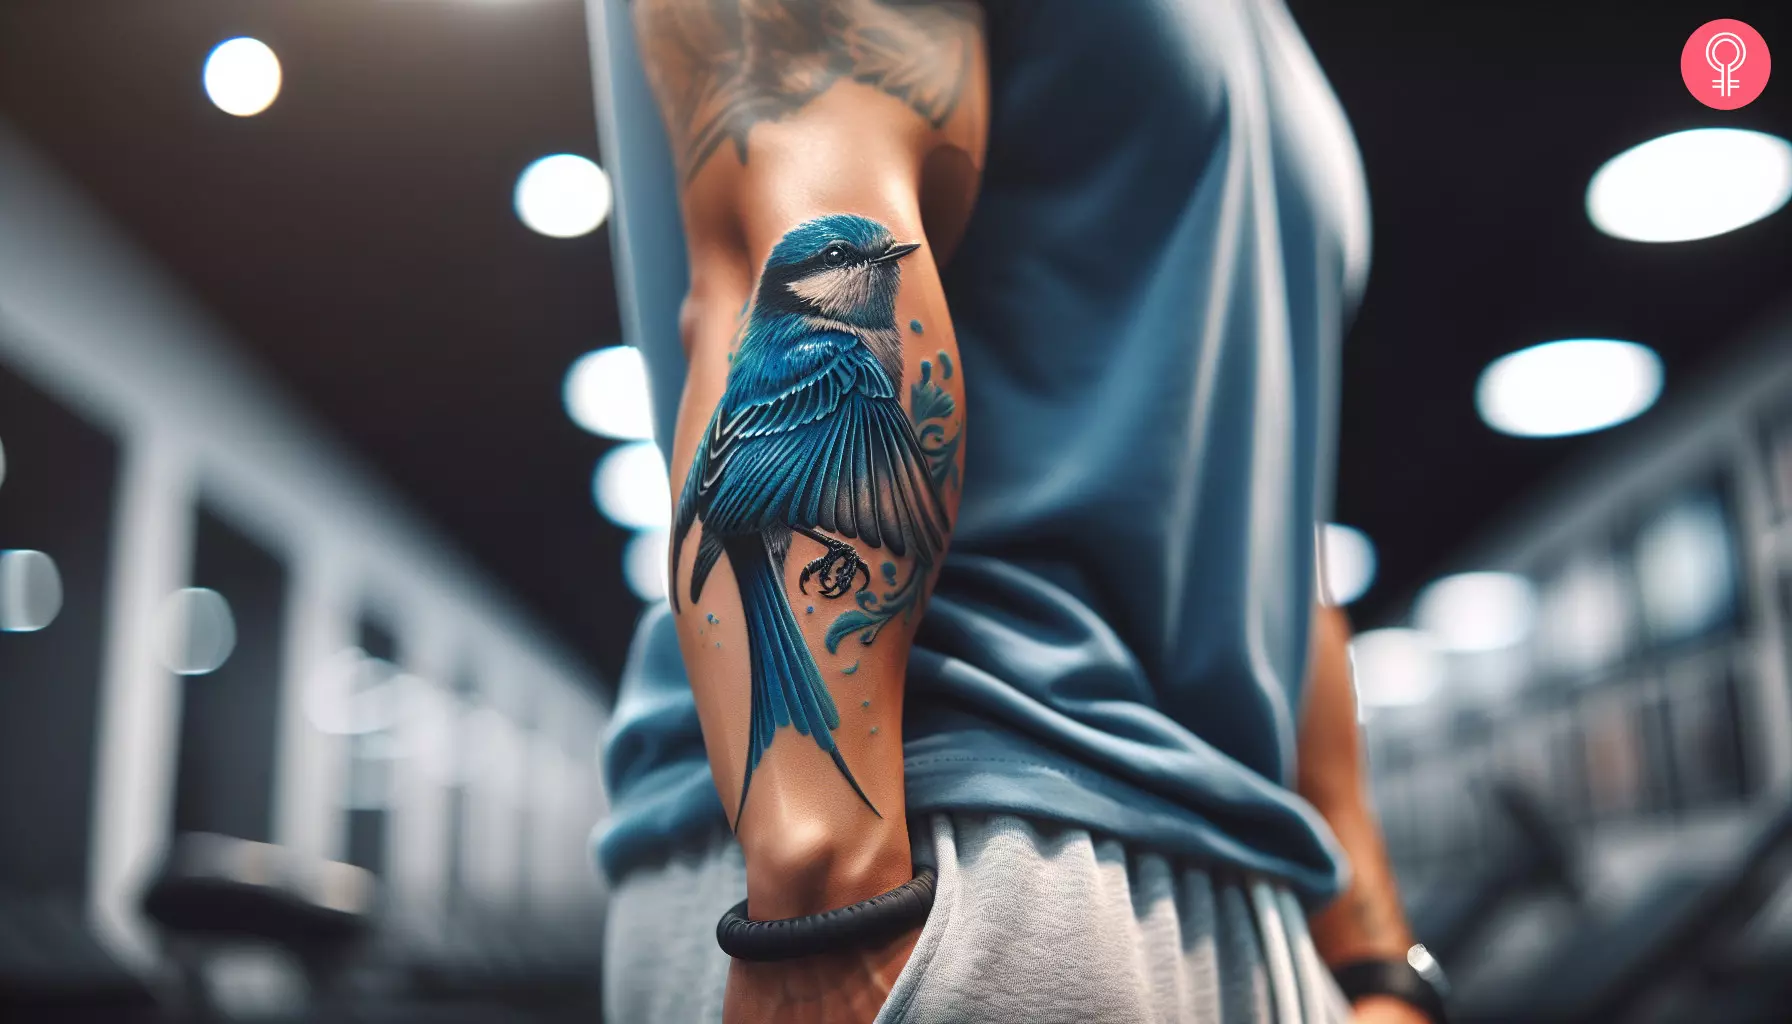 Bluebird tattoo on the forearm of a man